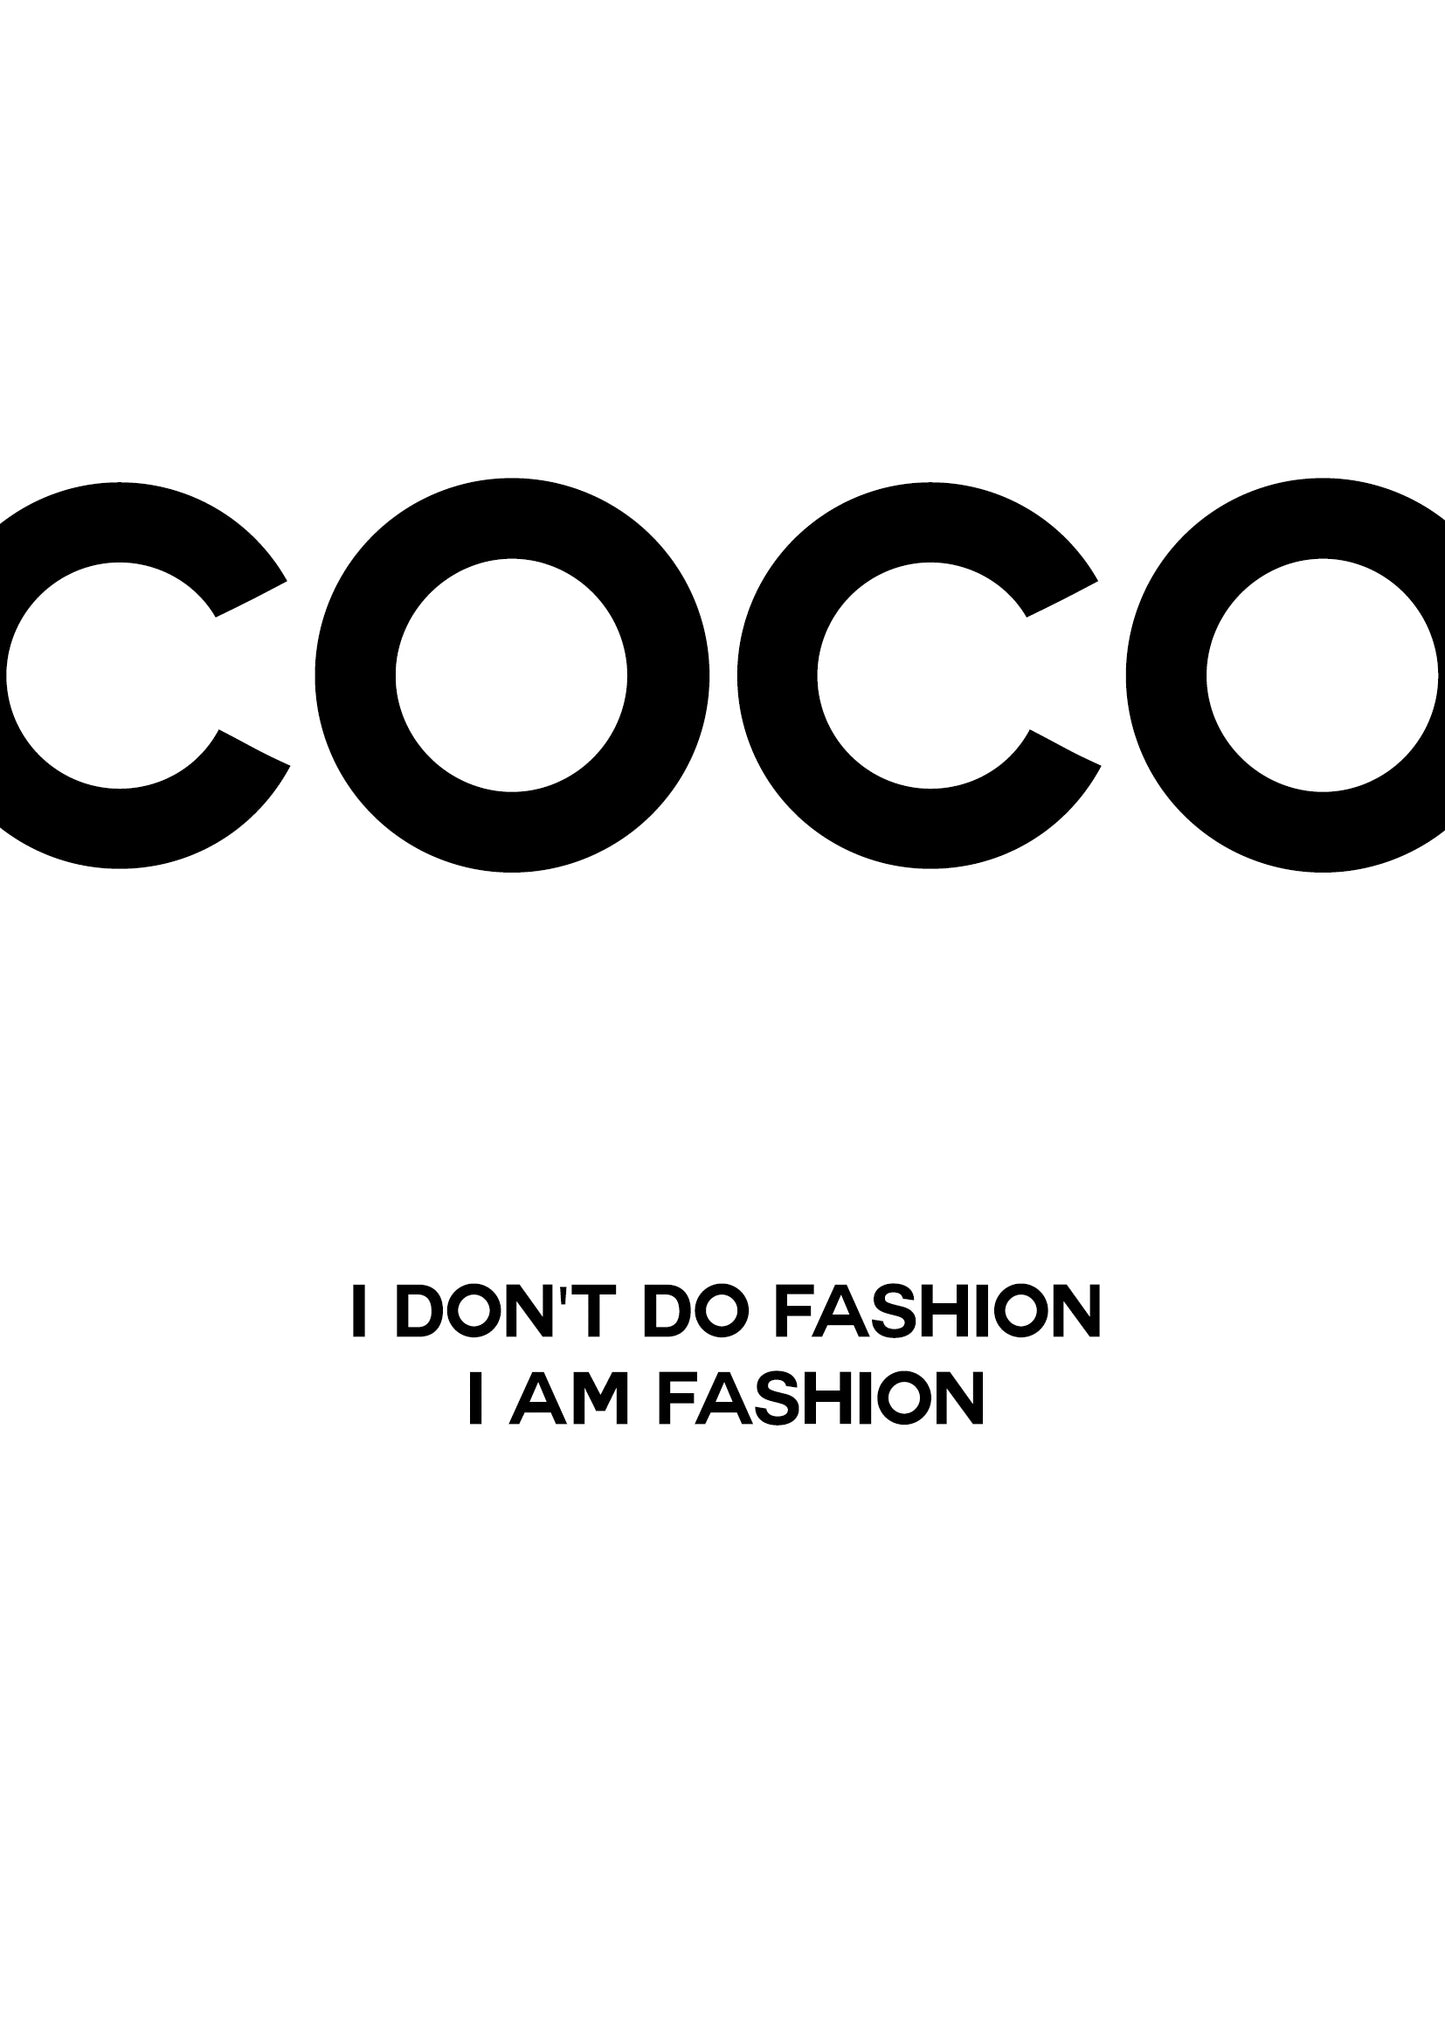 Lumartos Coco I Don't Do Fashion Quote